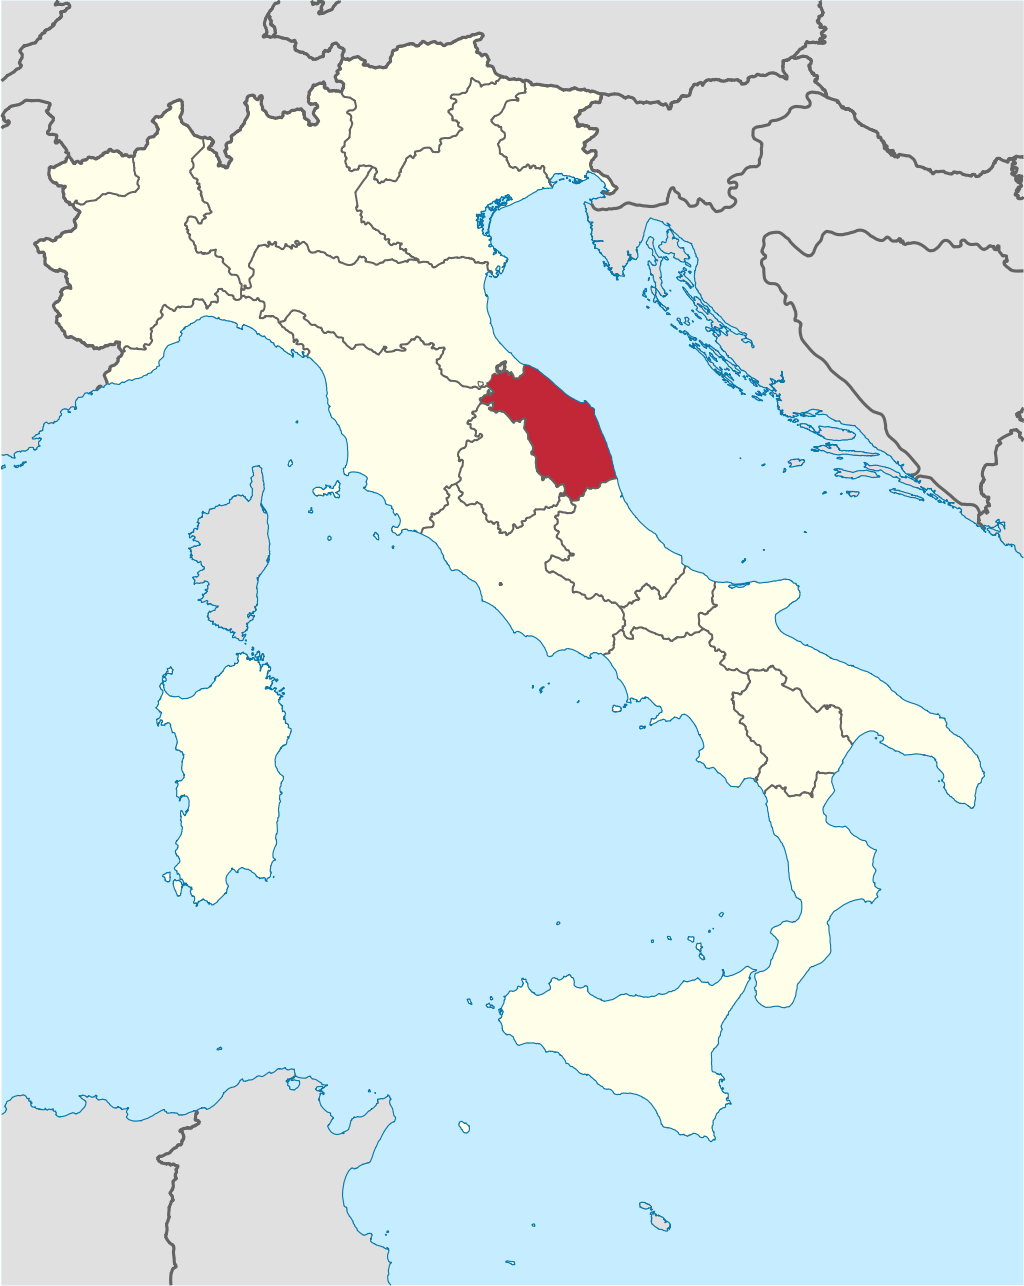 Appartement Giulia Urbex locatie in of rond de regio Marche (Macerata), Italy